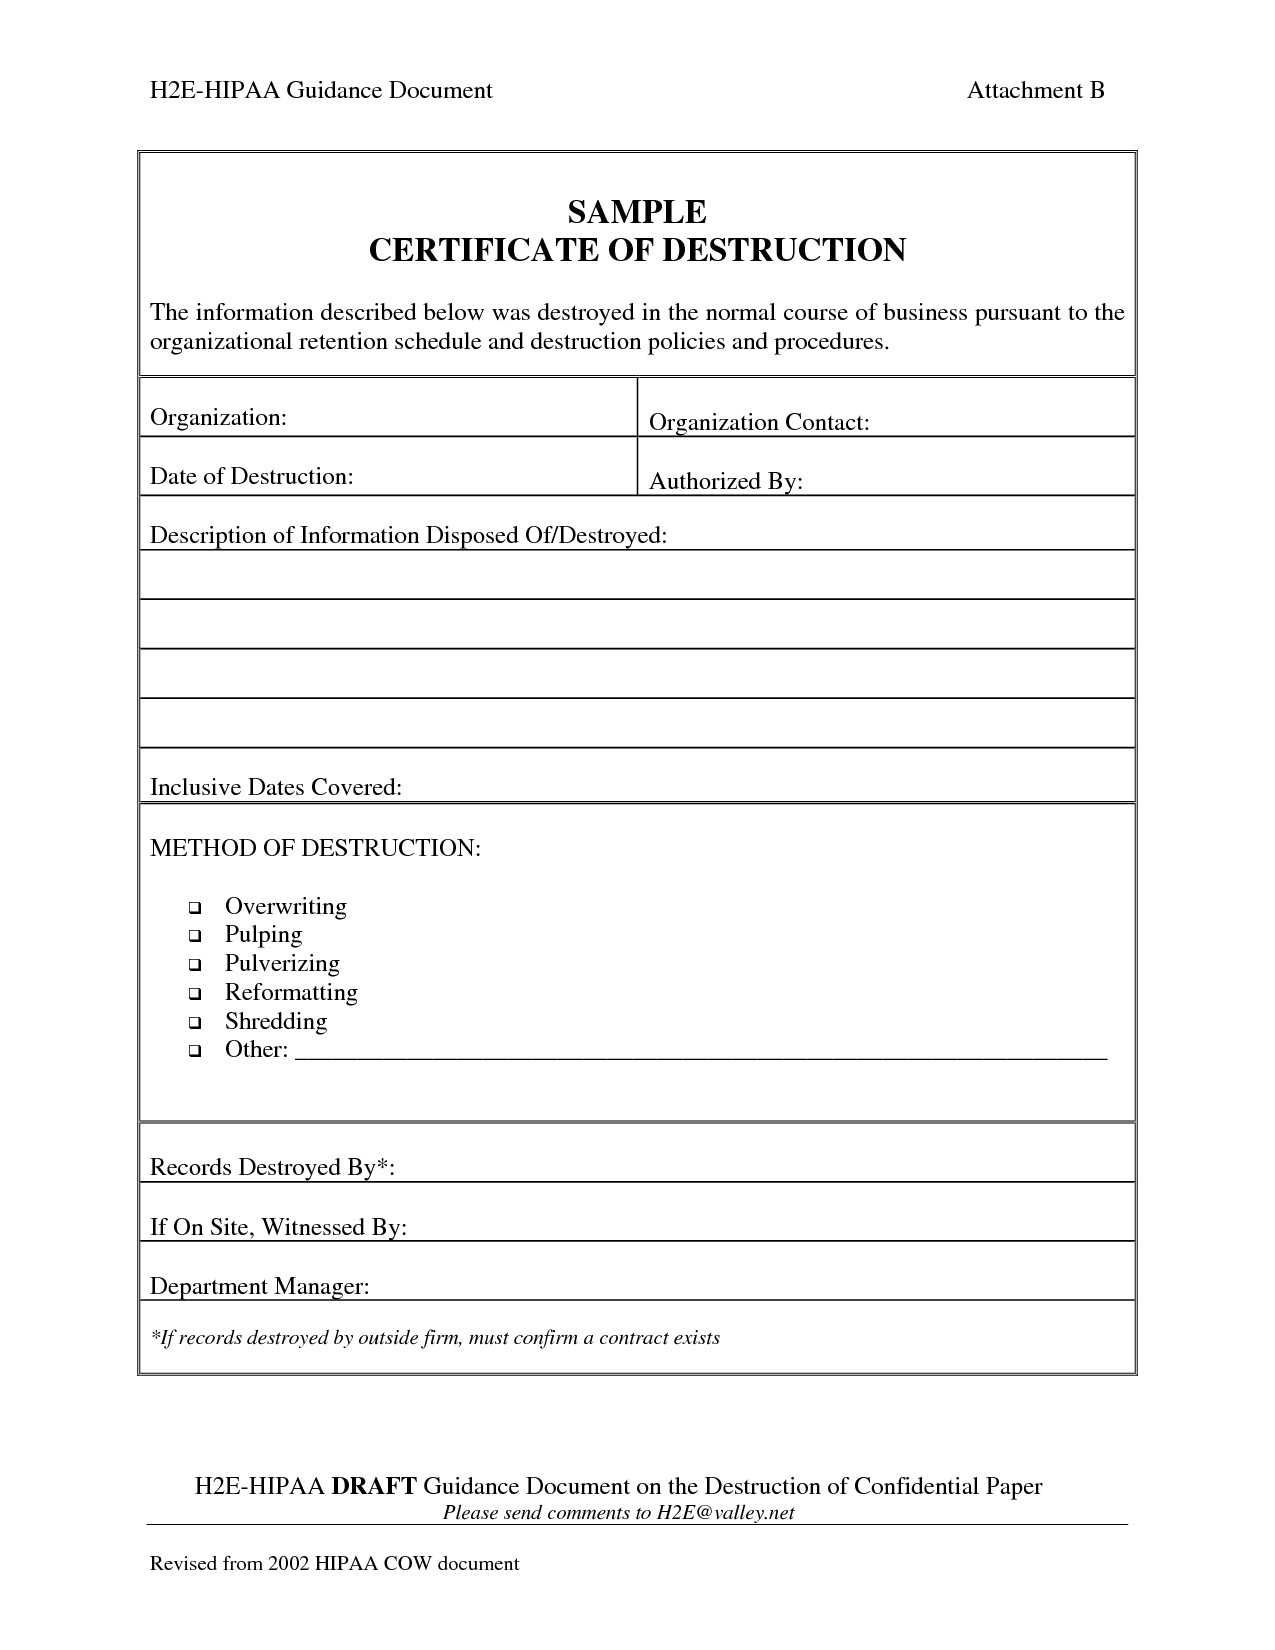 001 Template Ideas Certificate Of Destruction Frightening Data intended for Certificate Of Destruction Template